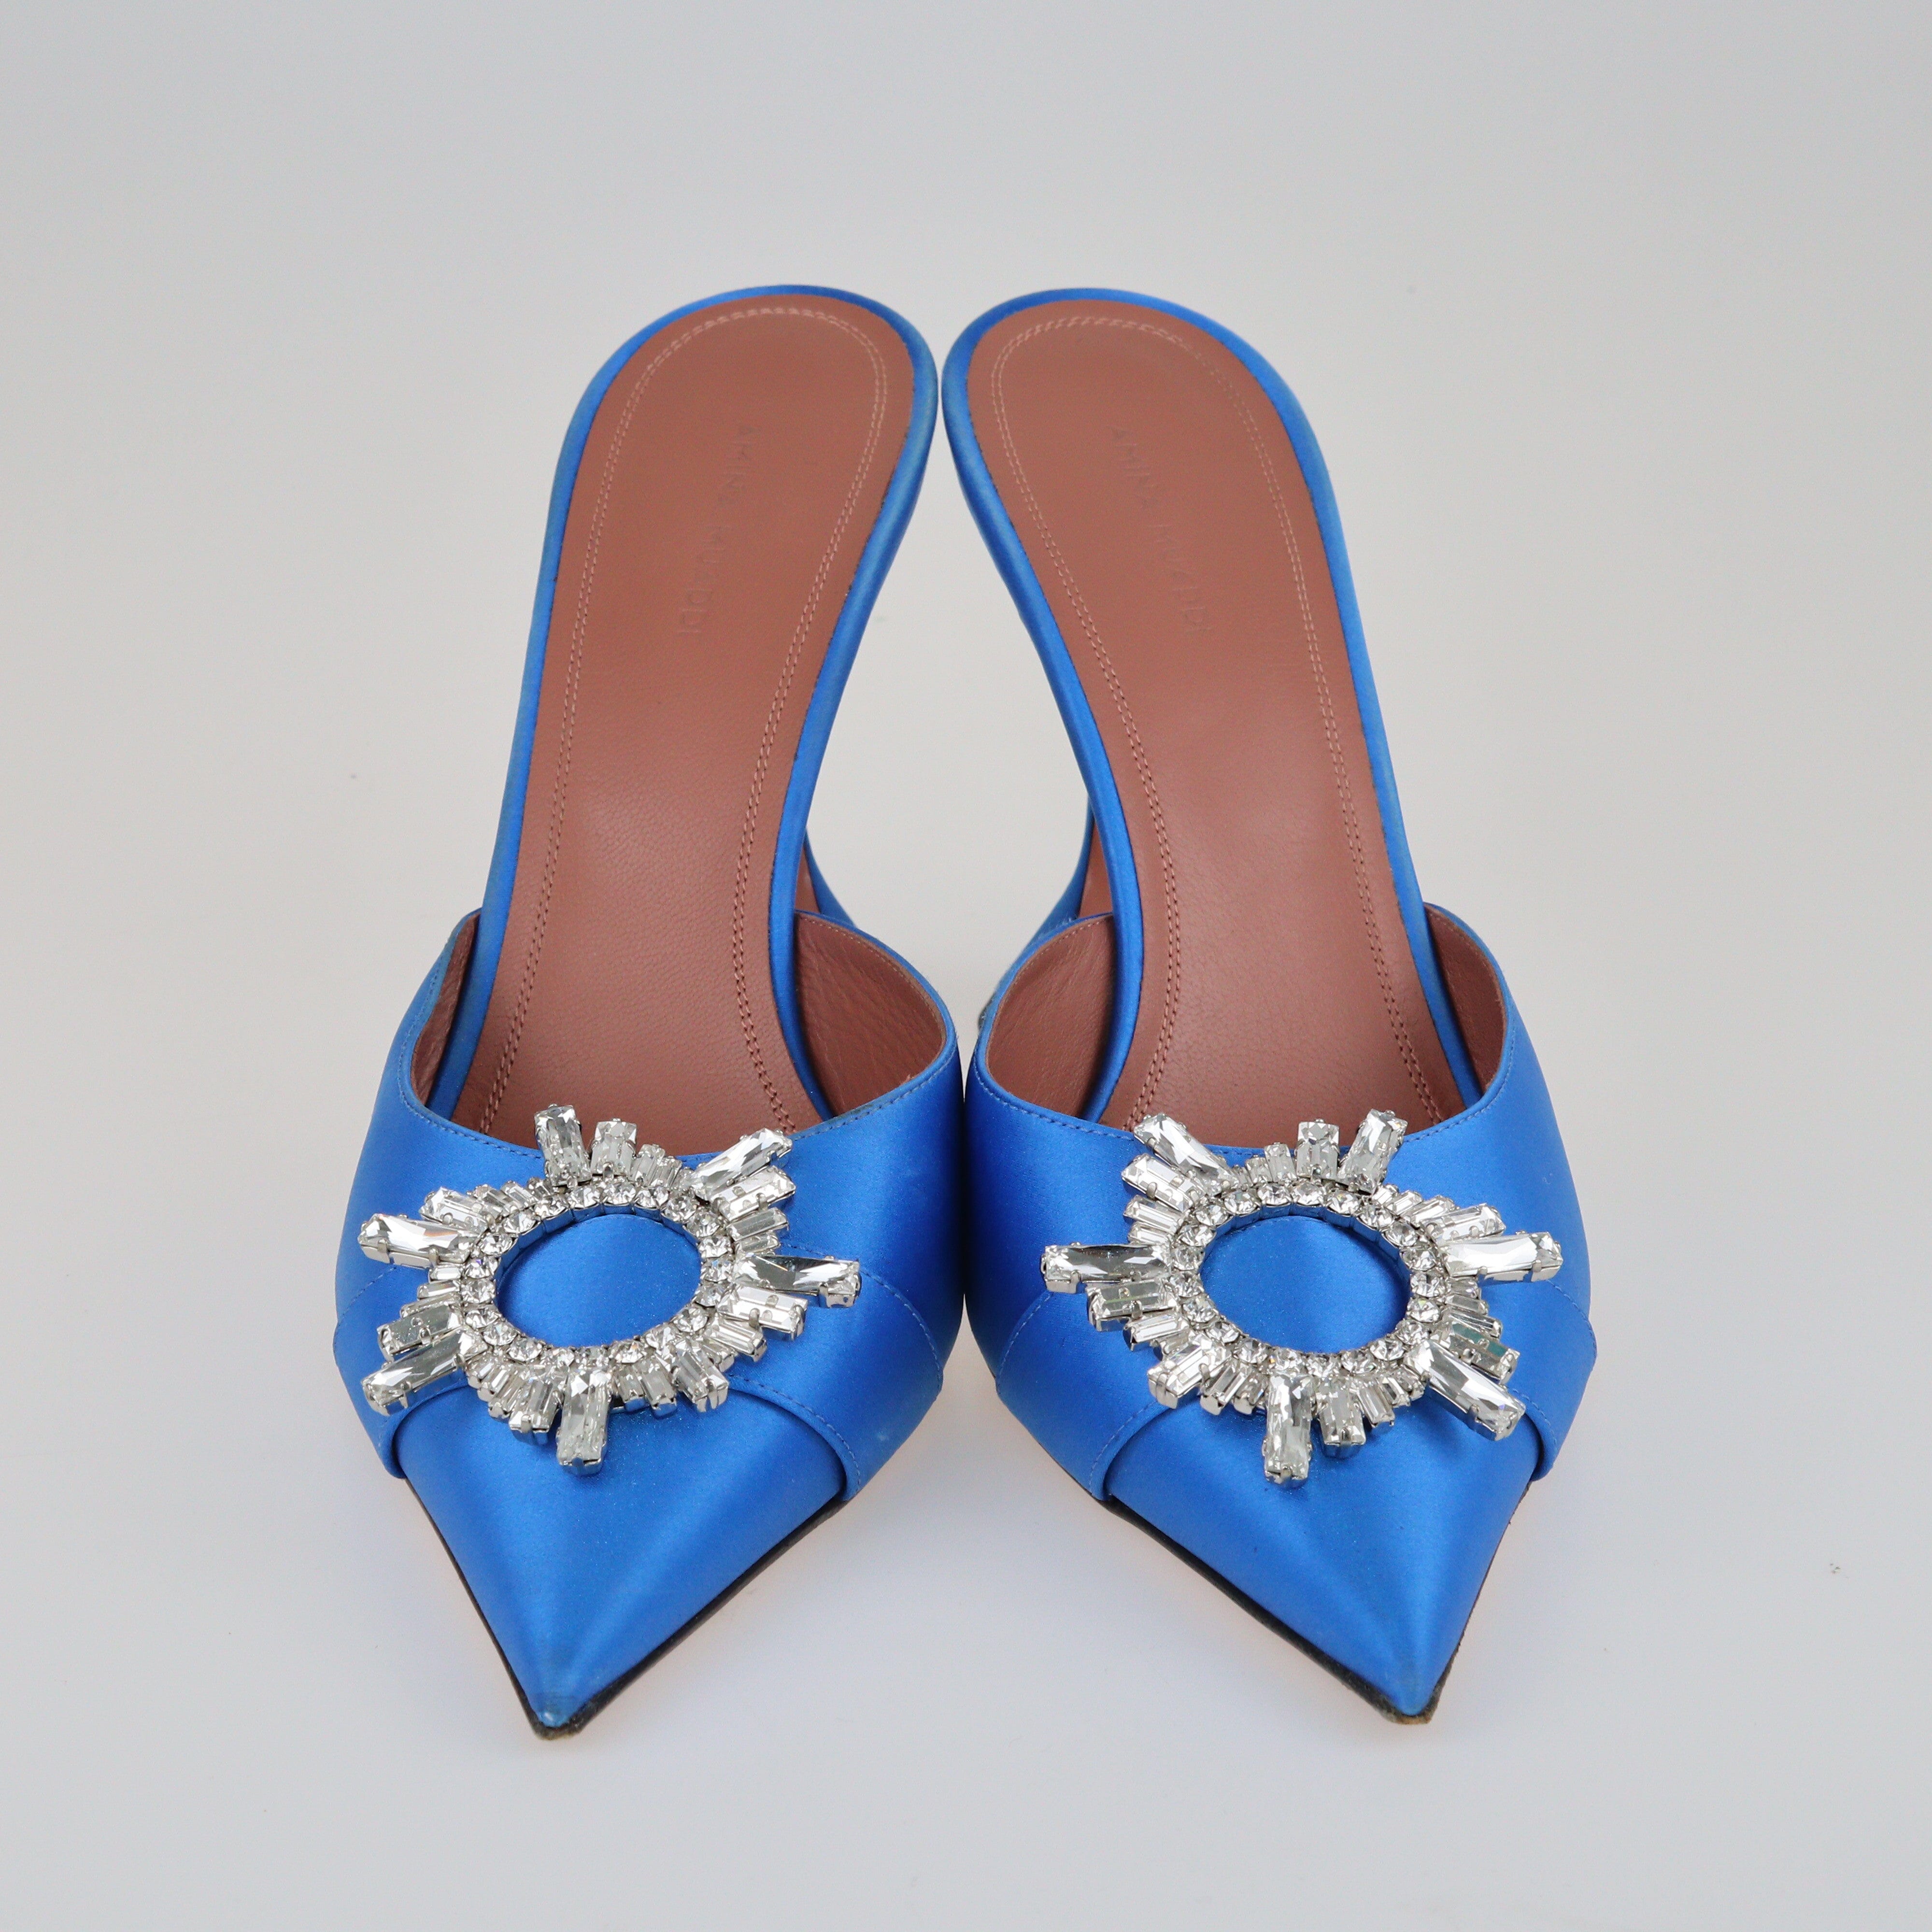 Blue Begum Mules Shoes Amina Muaddi 